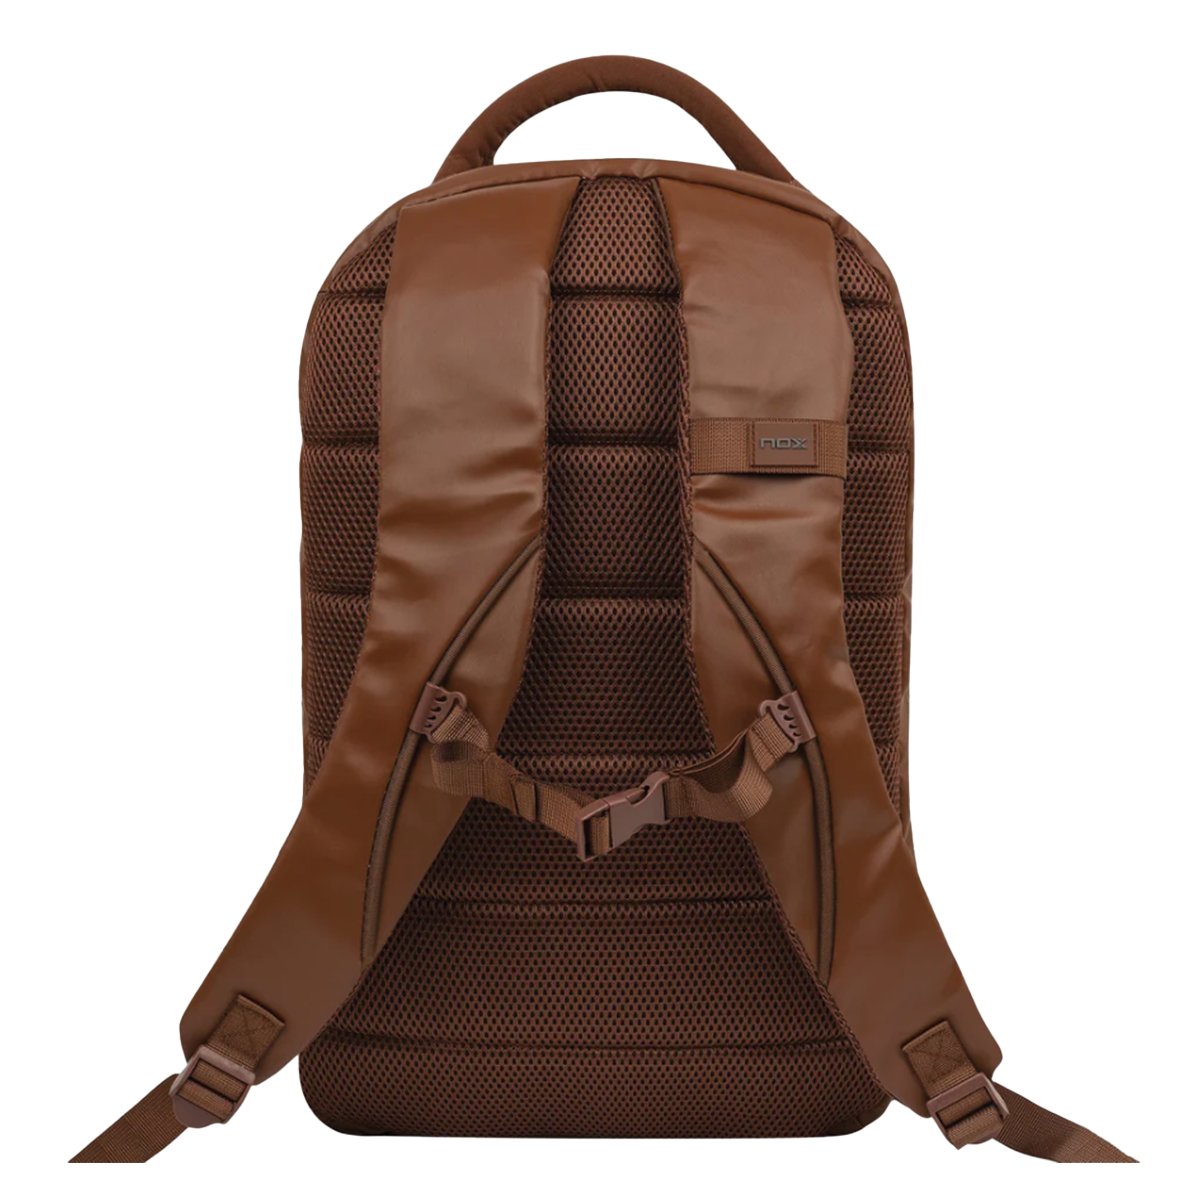 NOX Camel Pro Series Backpack